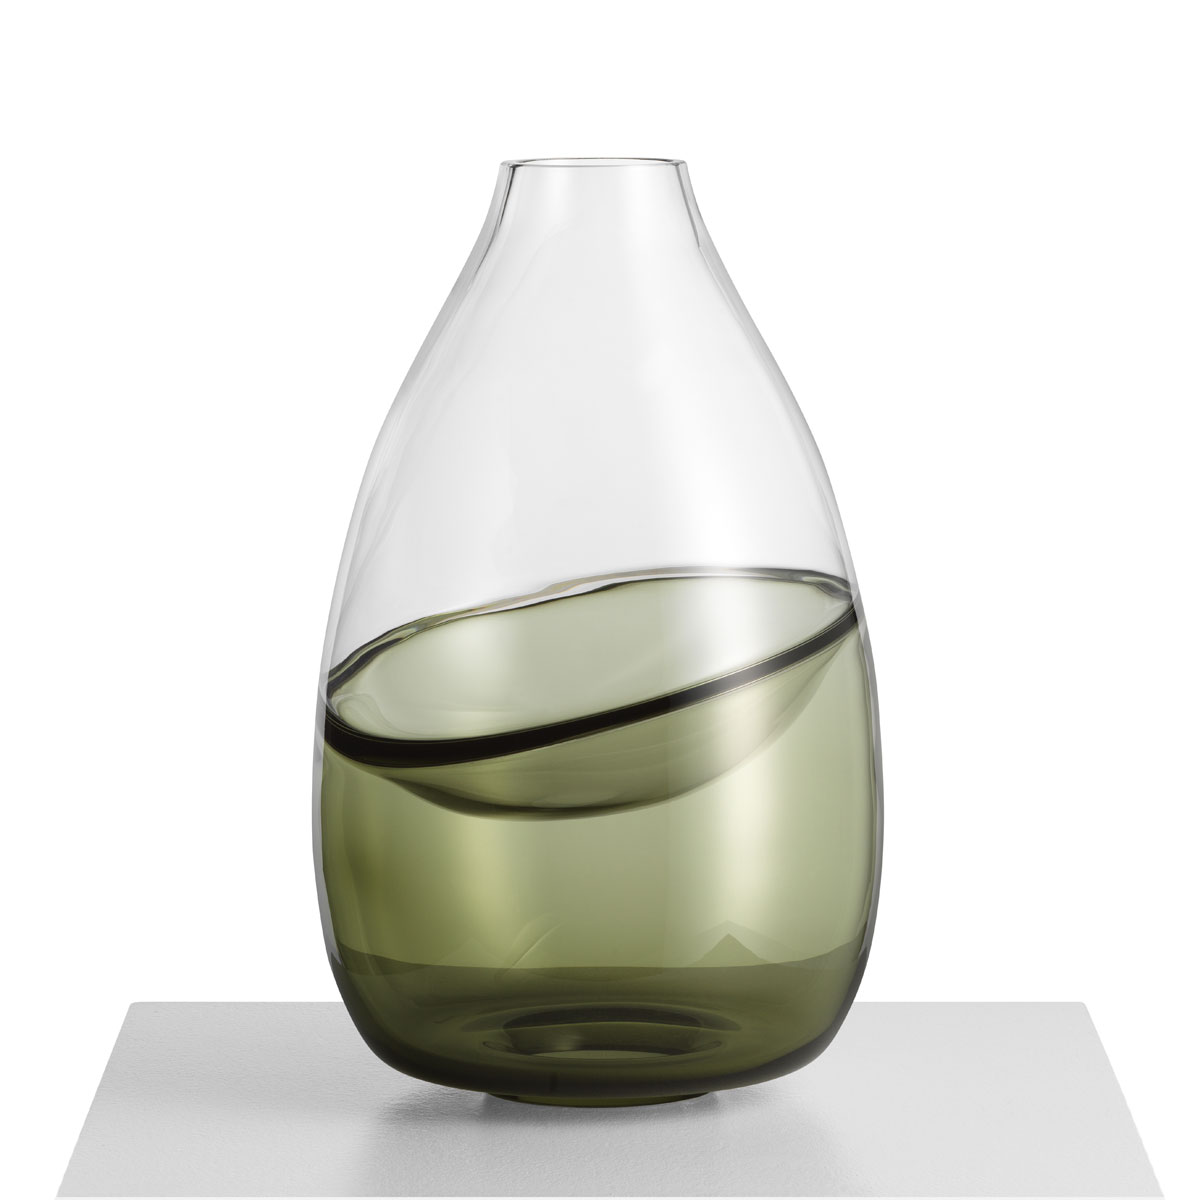 Kosta Boda Art Glass Mattias Stenberg Septum Vase Limited Edition of 300